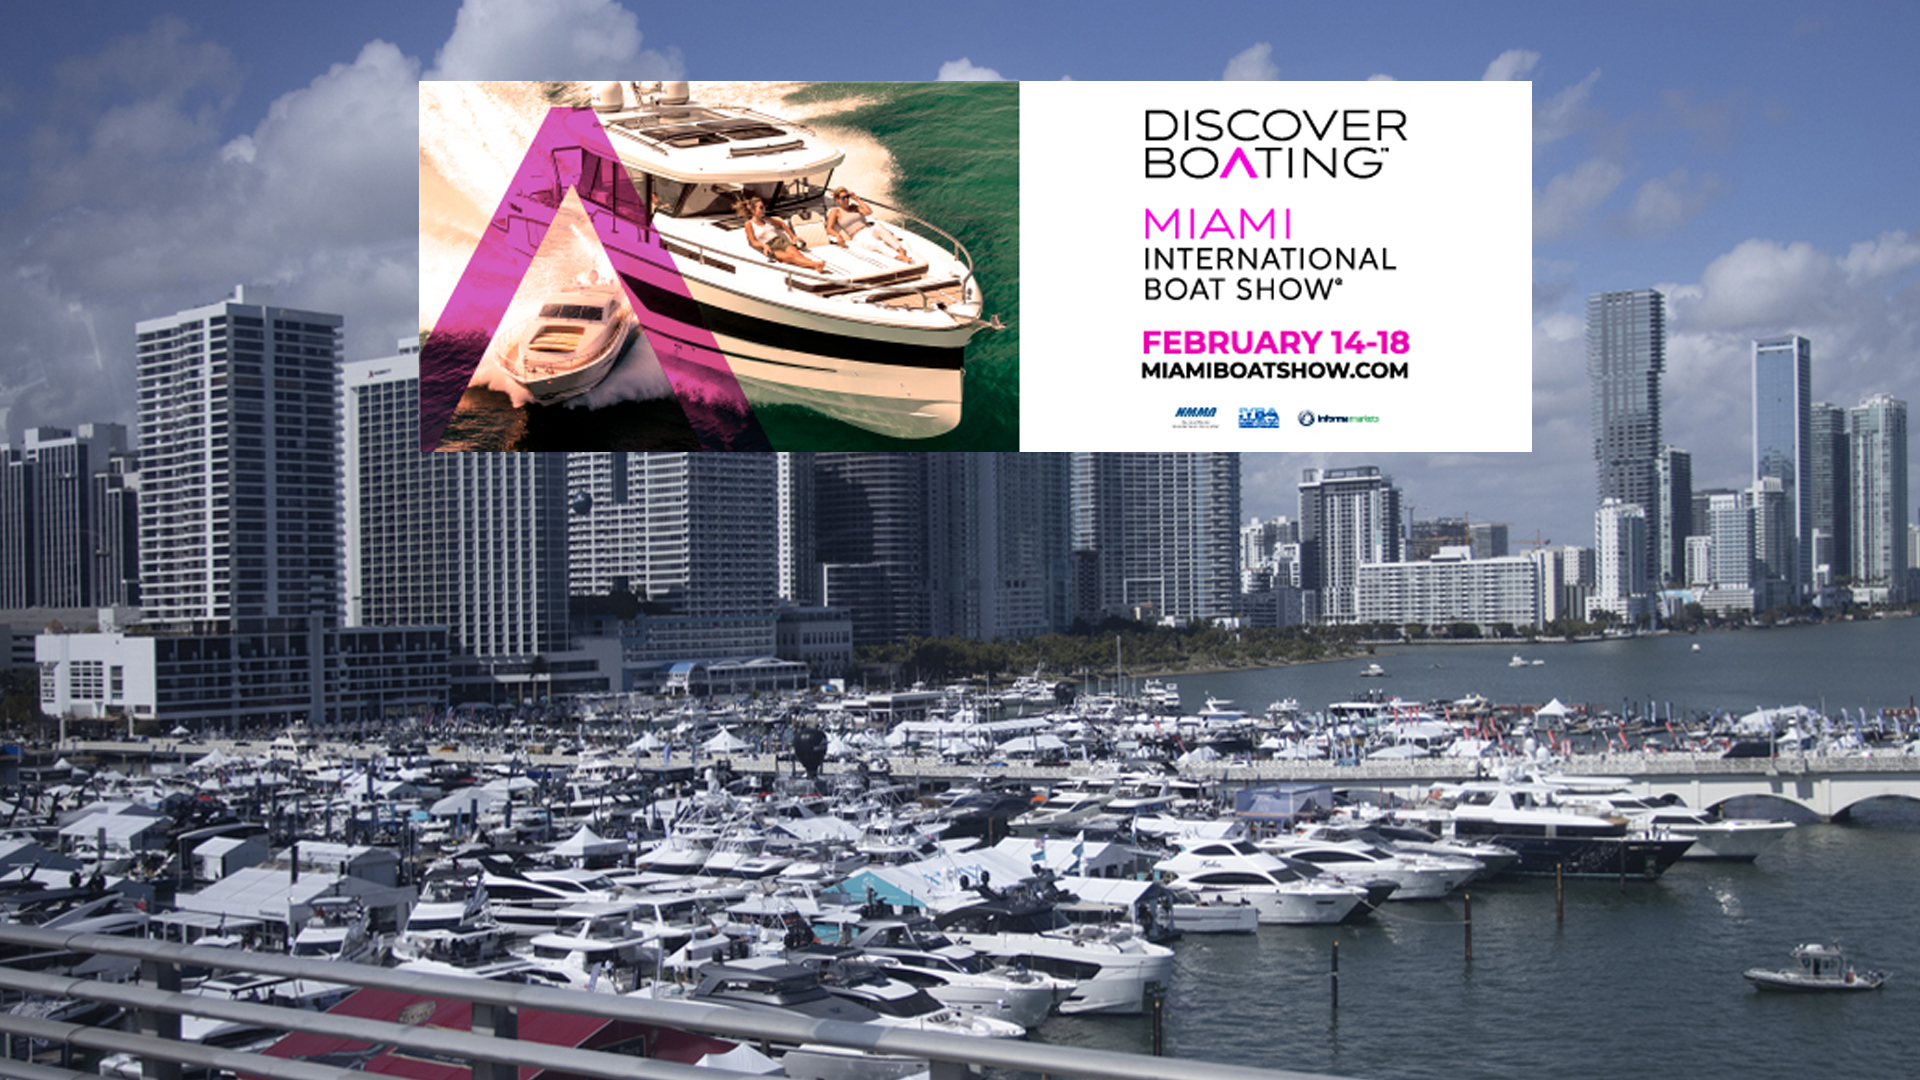 Miami International Boat Show top image